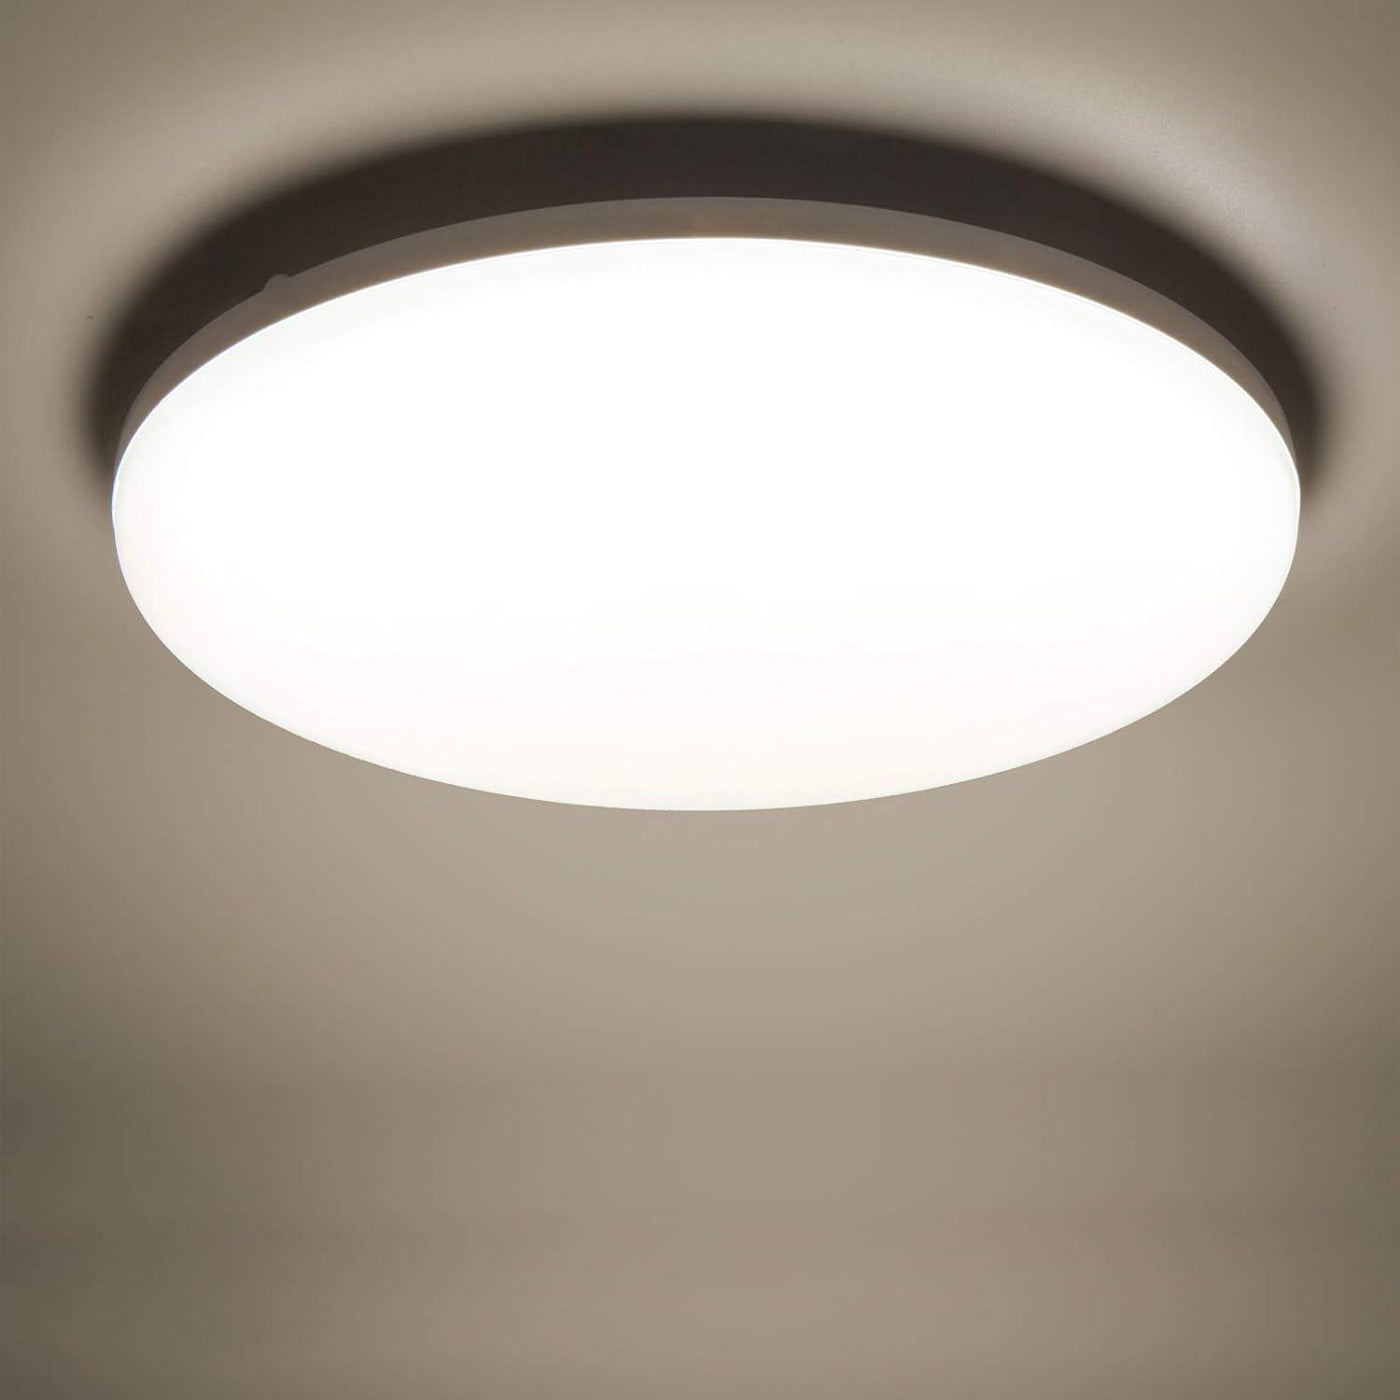 Ceiling Light Ultra Slim 36W 3240LM LED Panel Light Natural White Ø23cm - Massive Discounts